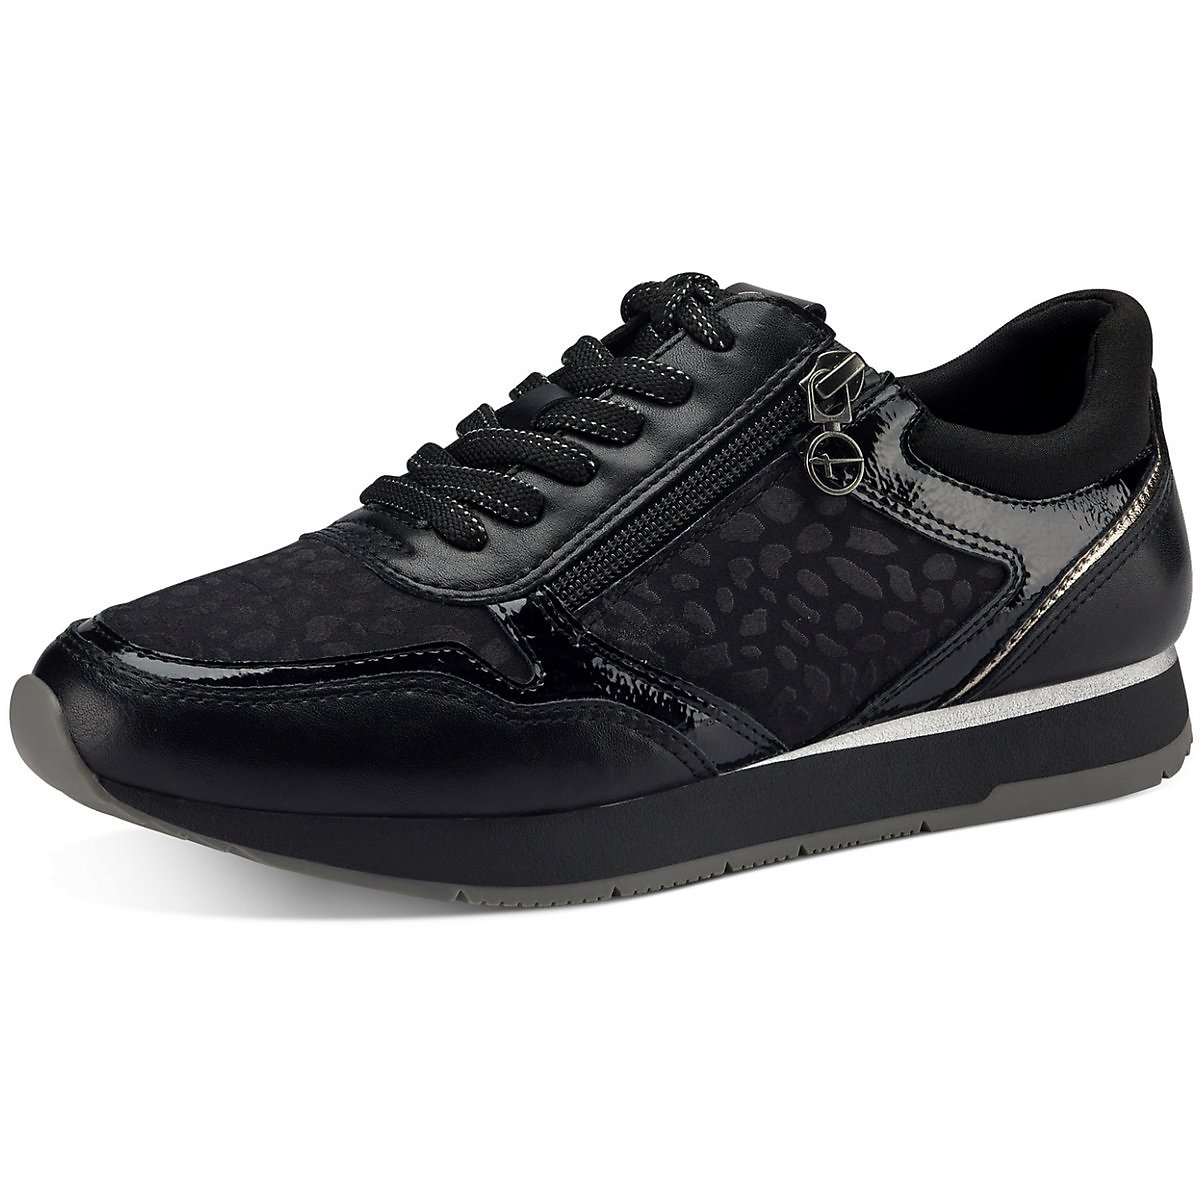 Tamaris Damen Low Sneaker Low Top 1-23603-20 Schwarz 085 Black Uni Comb Textil/Synthetik Sneakers Low schwarz